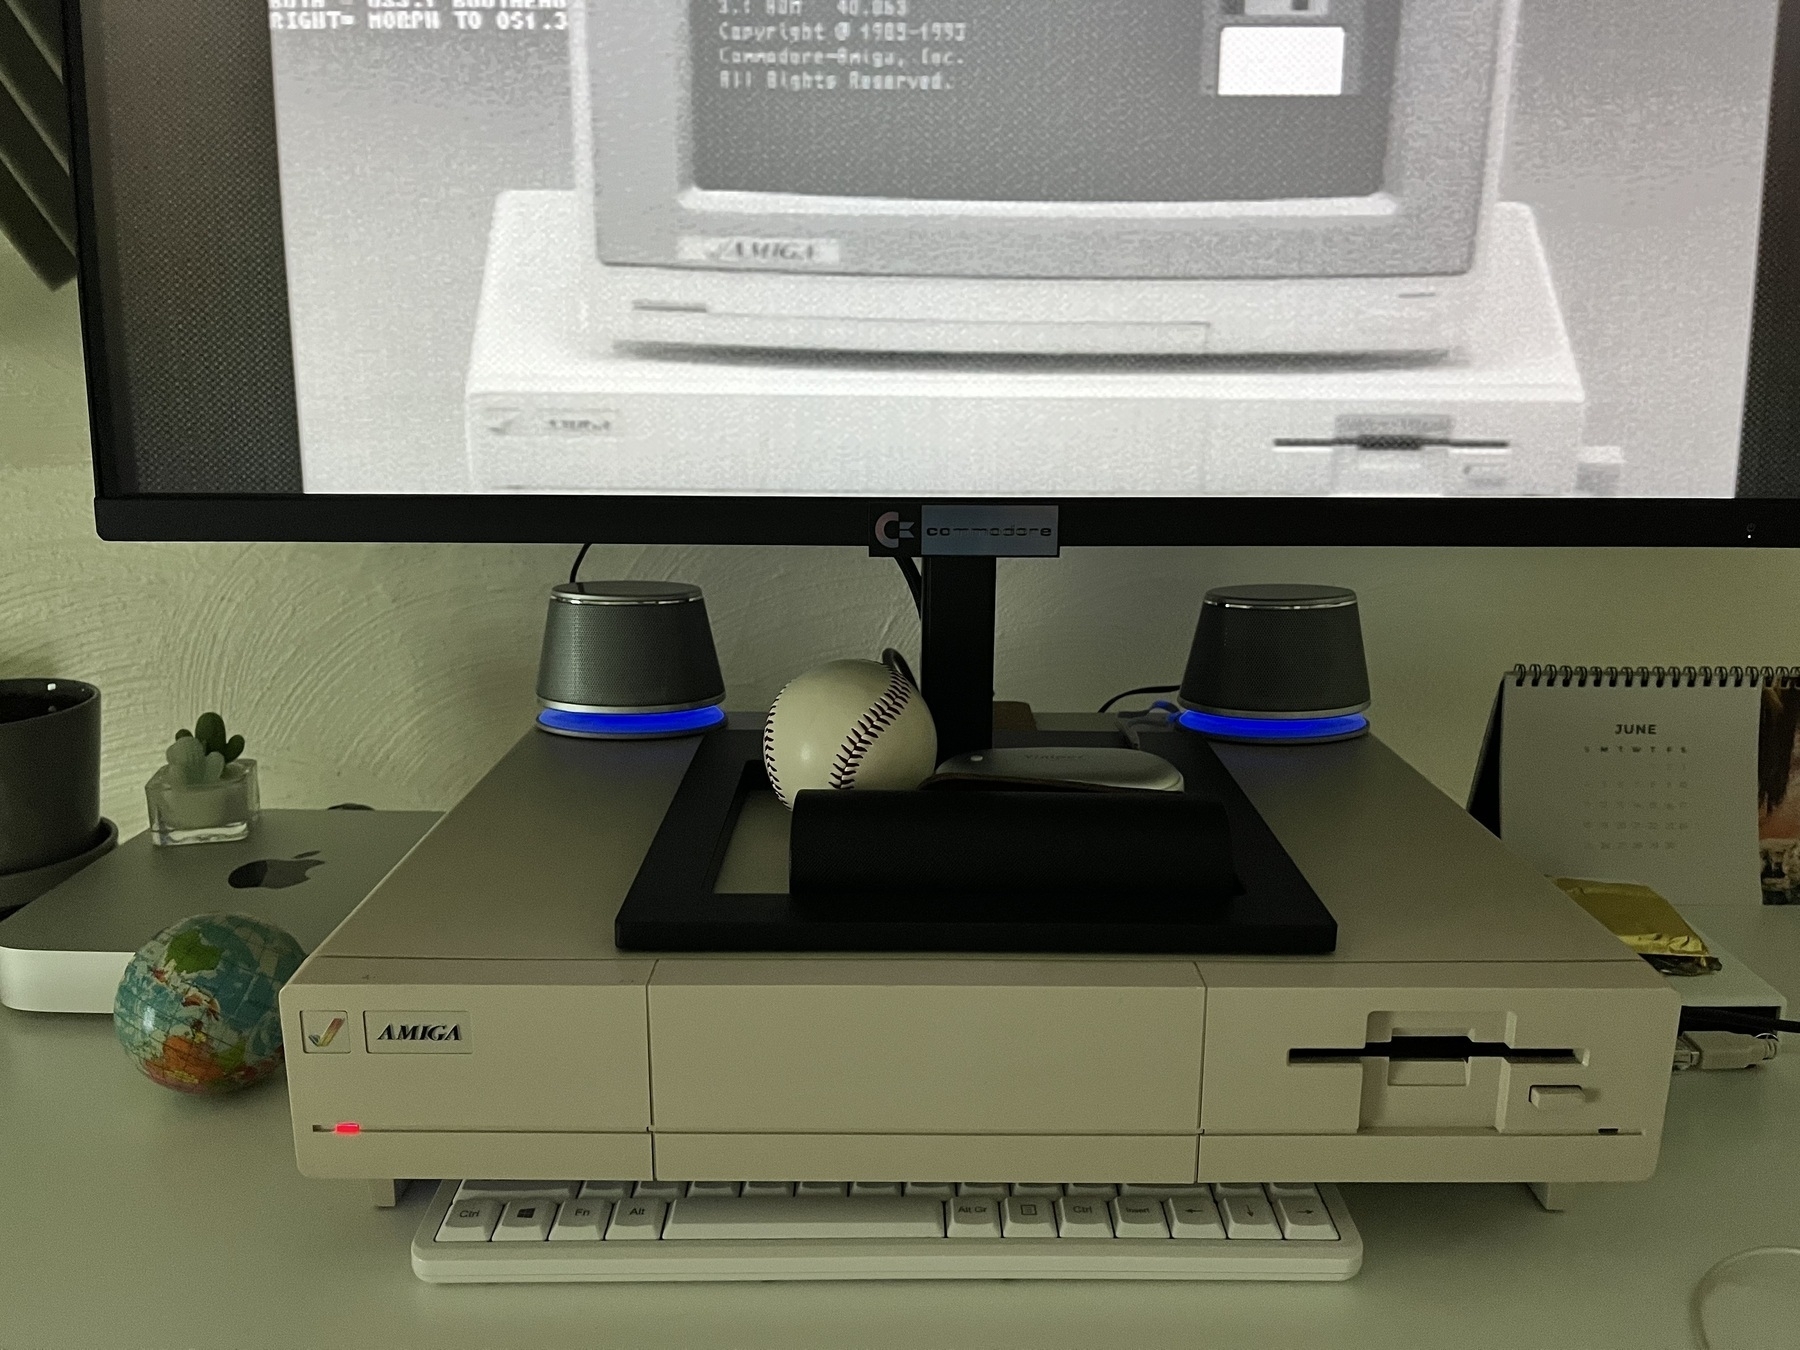 AmazonBasics computer speakers on top of Amiga 1000 with flat panel monitor